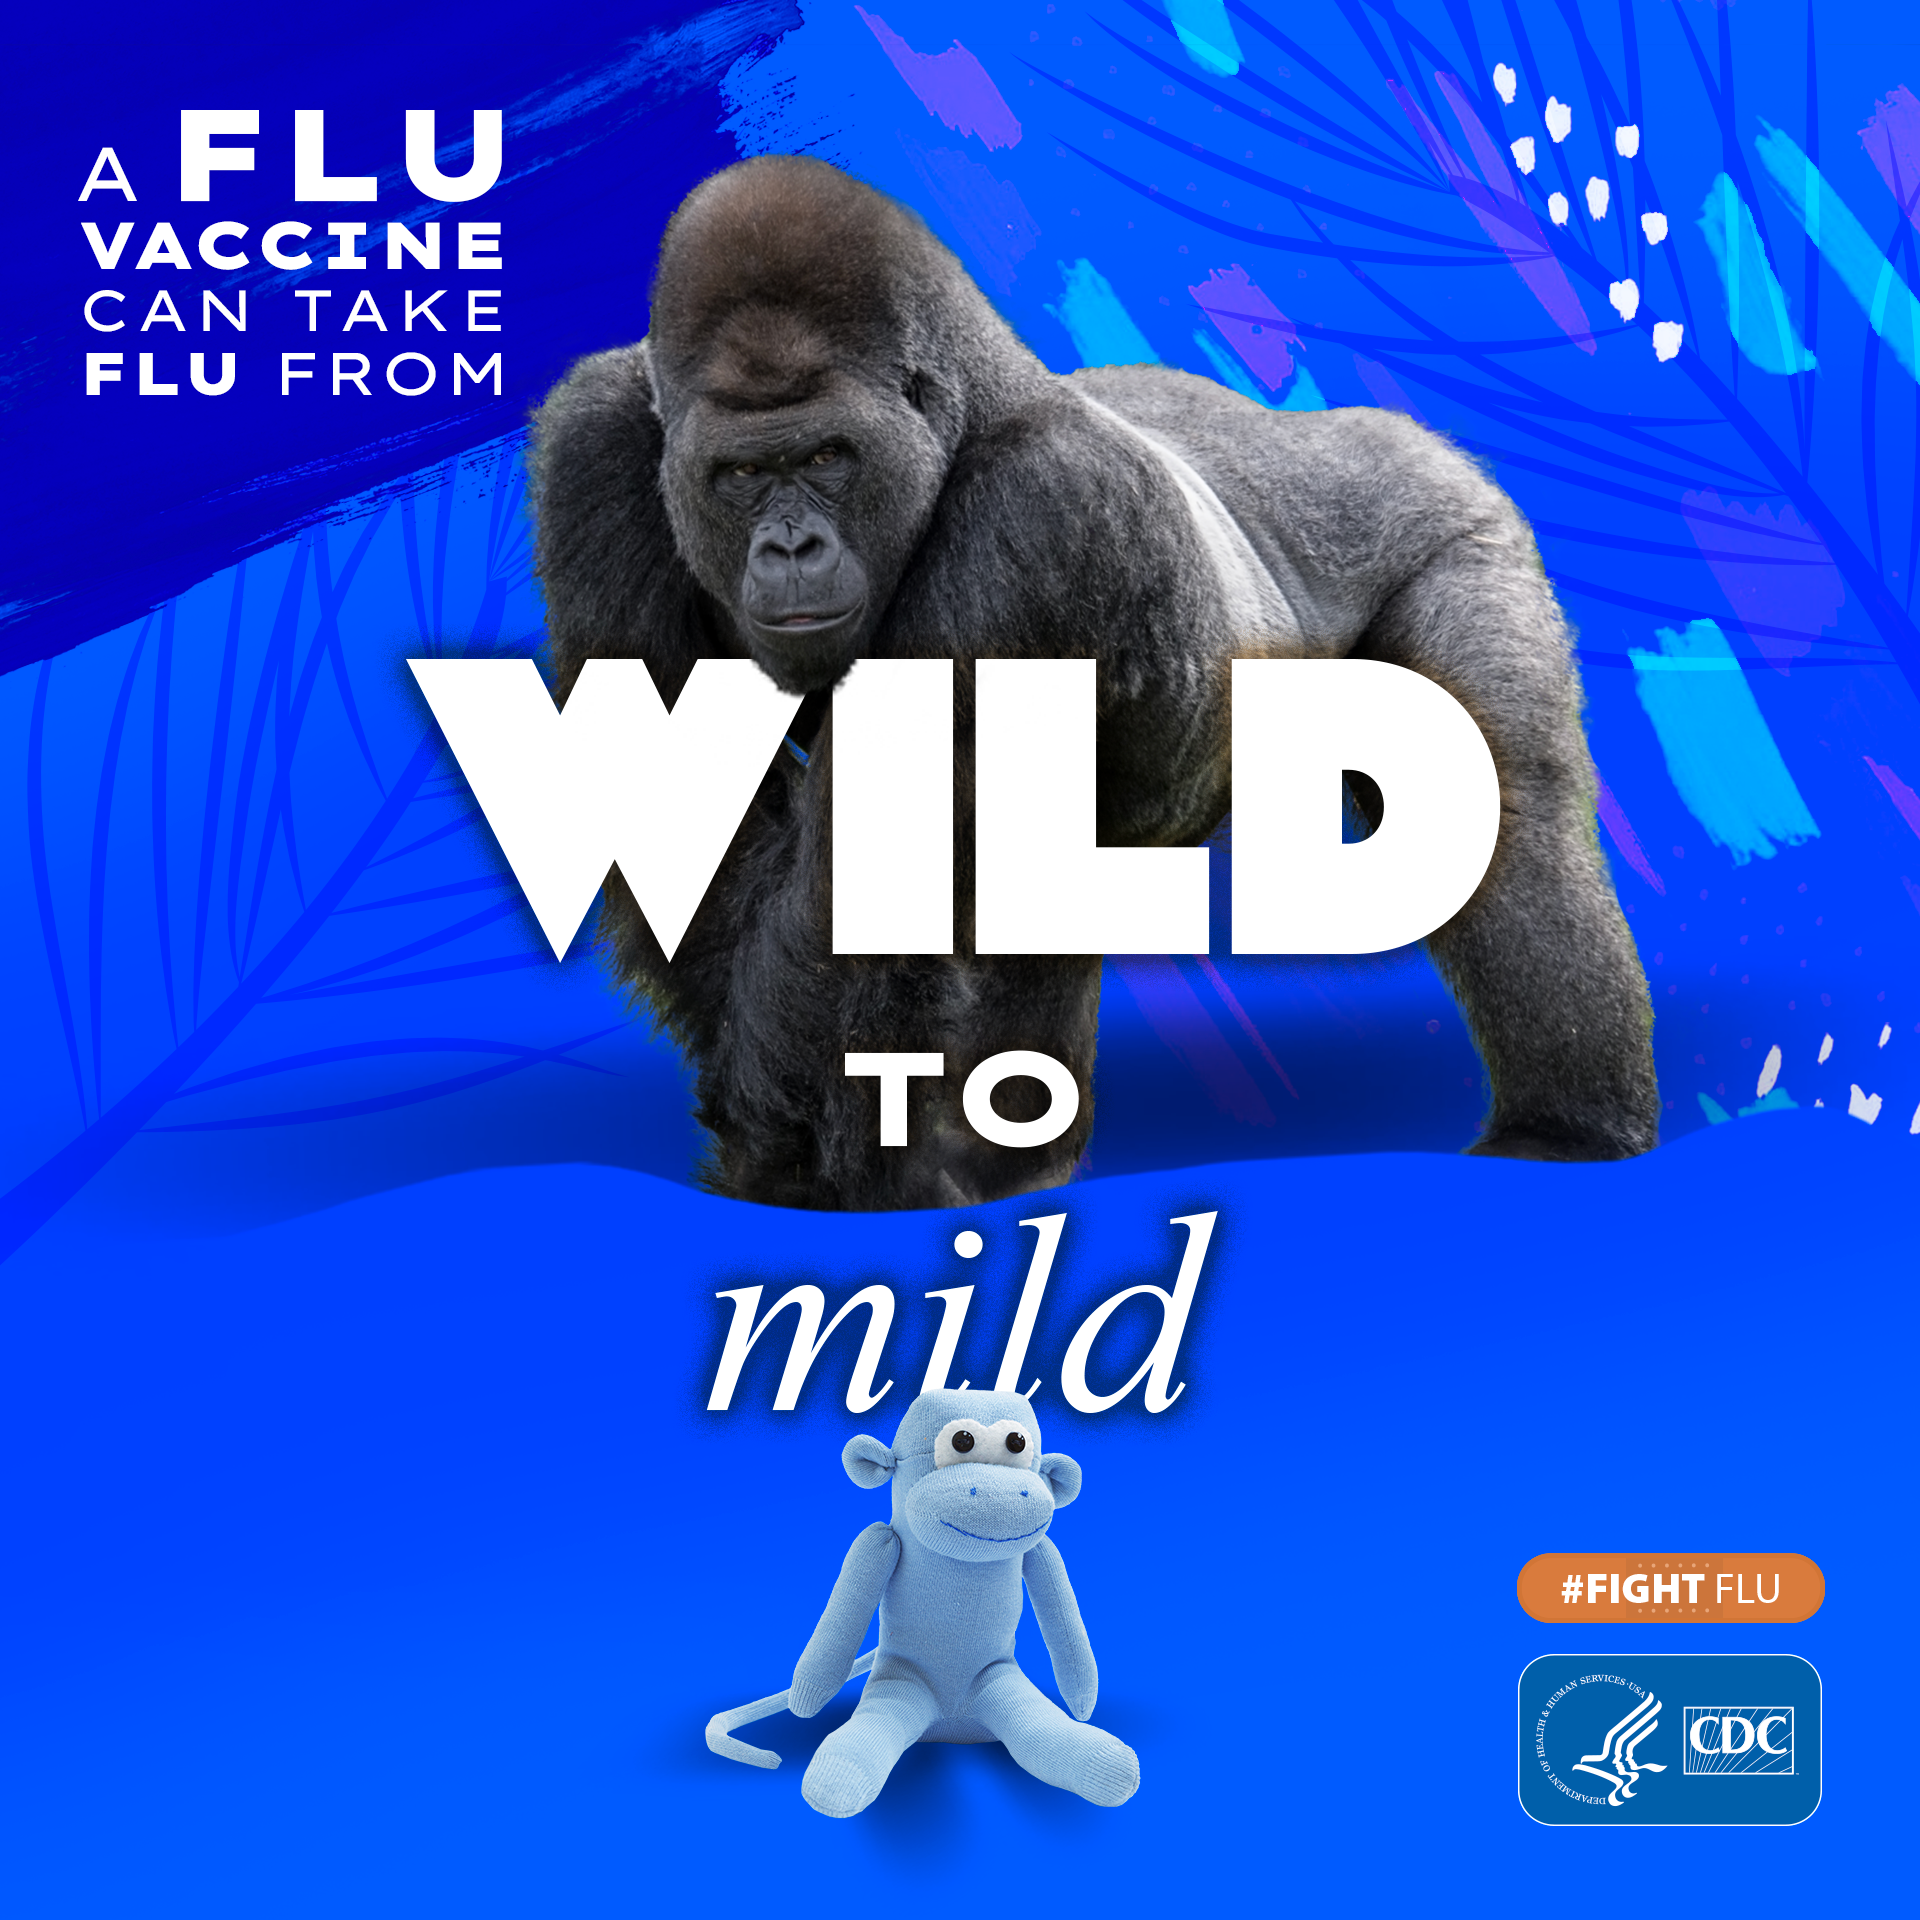 gorilla with text: A flu vaccine can take flu from wild to mild #fightflu CDC logo